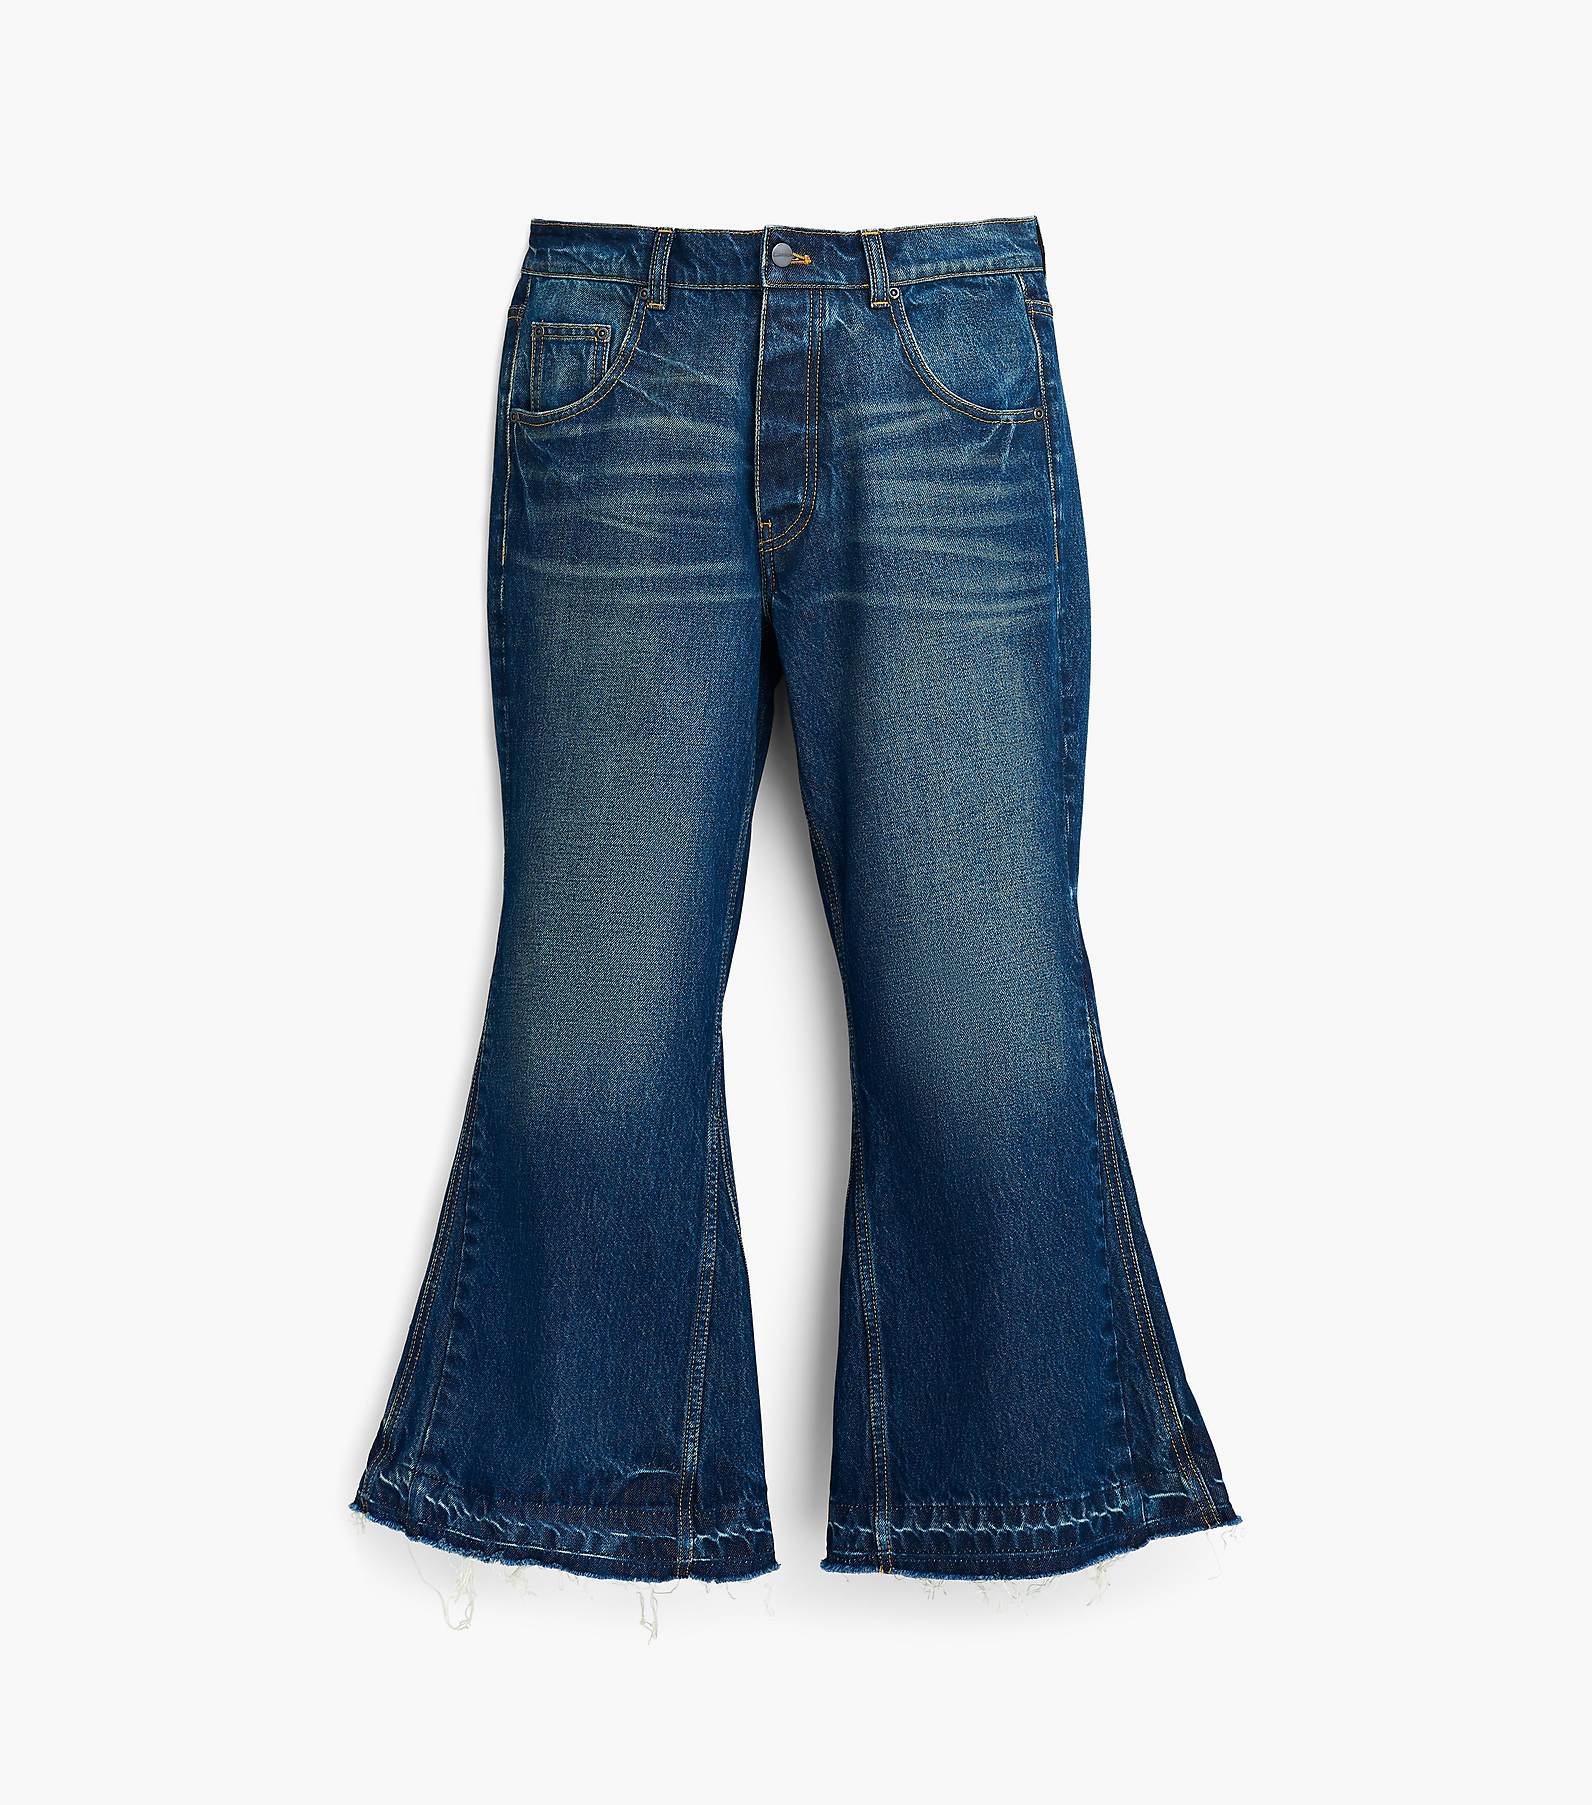 Free Shipping 2021 New Fashion 3/4 Pants For Women Denim Jeans